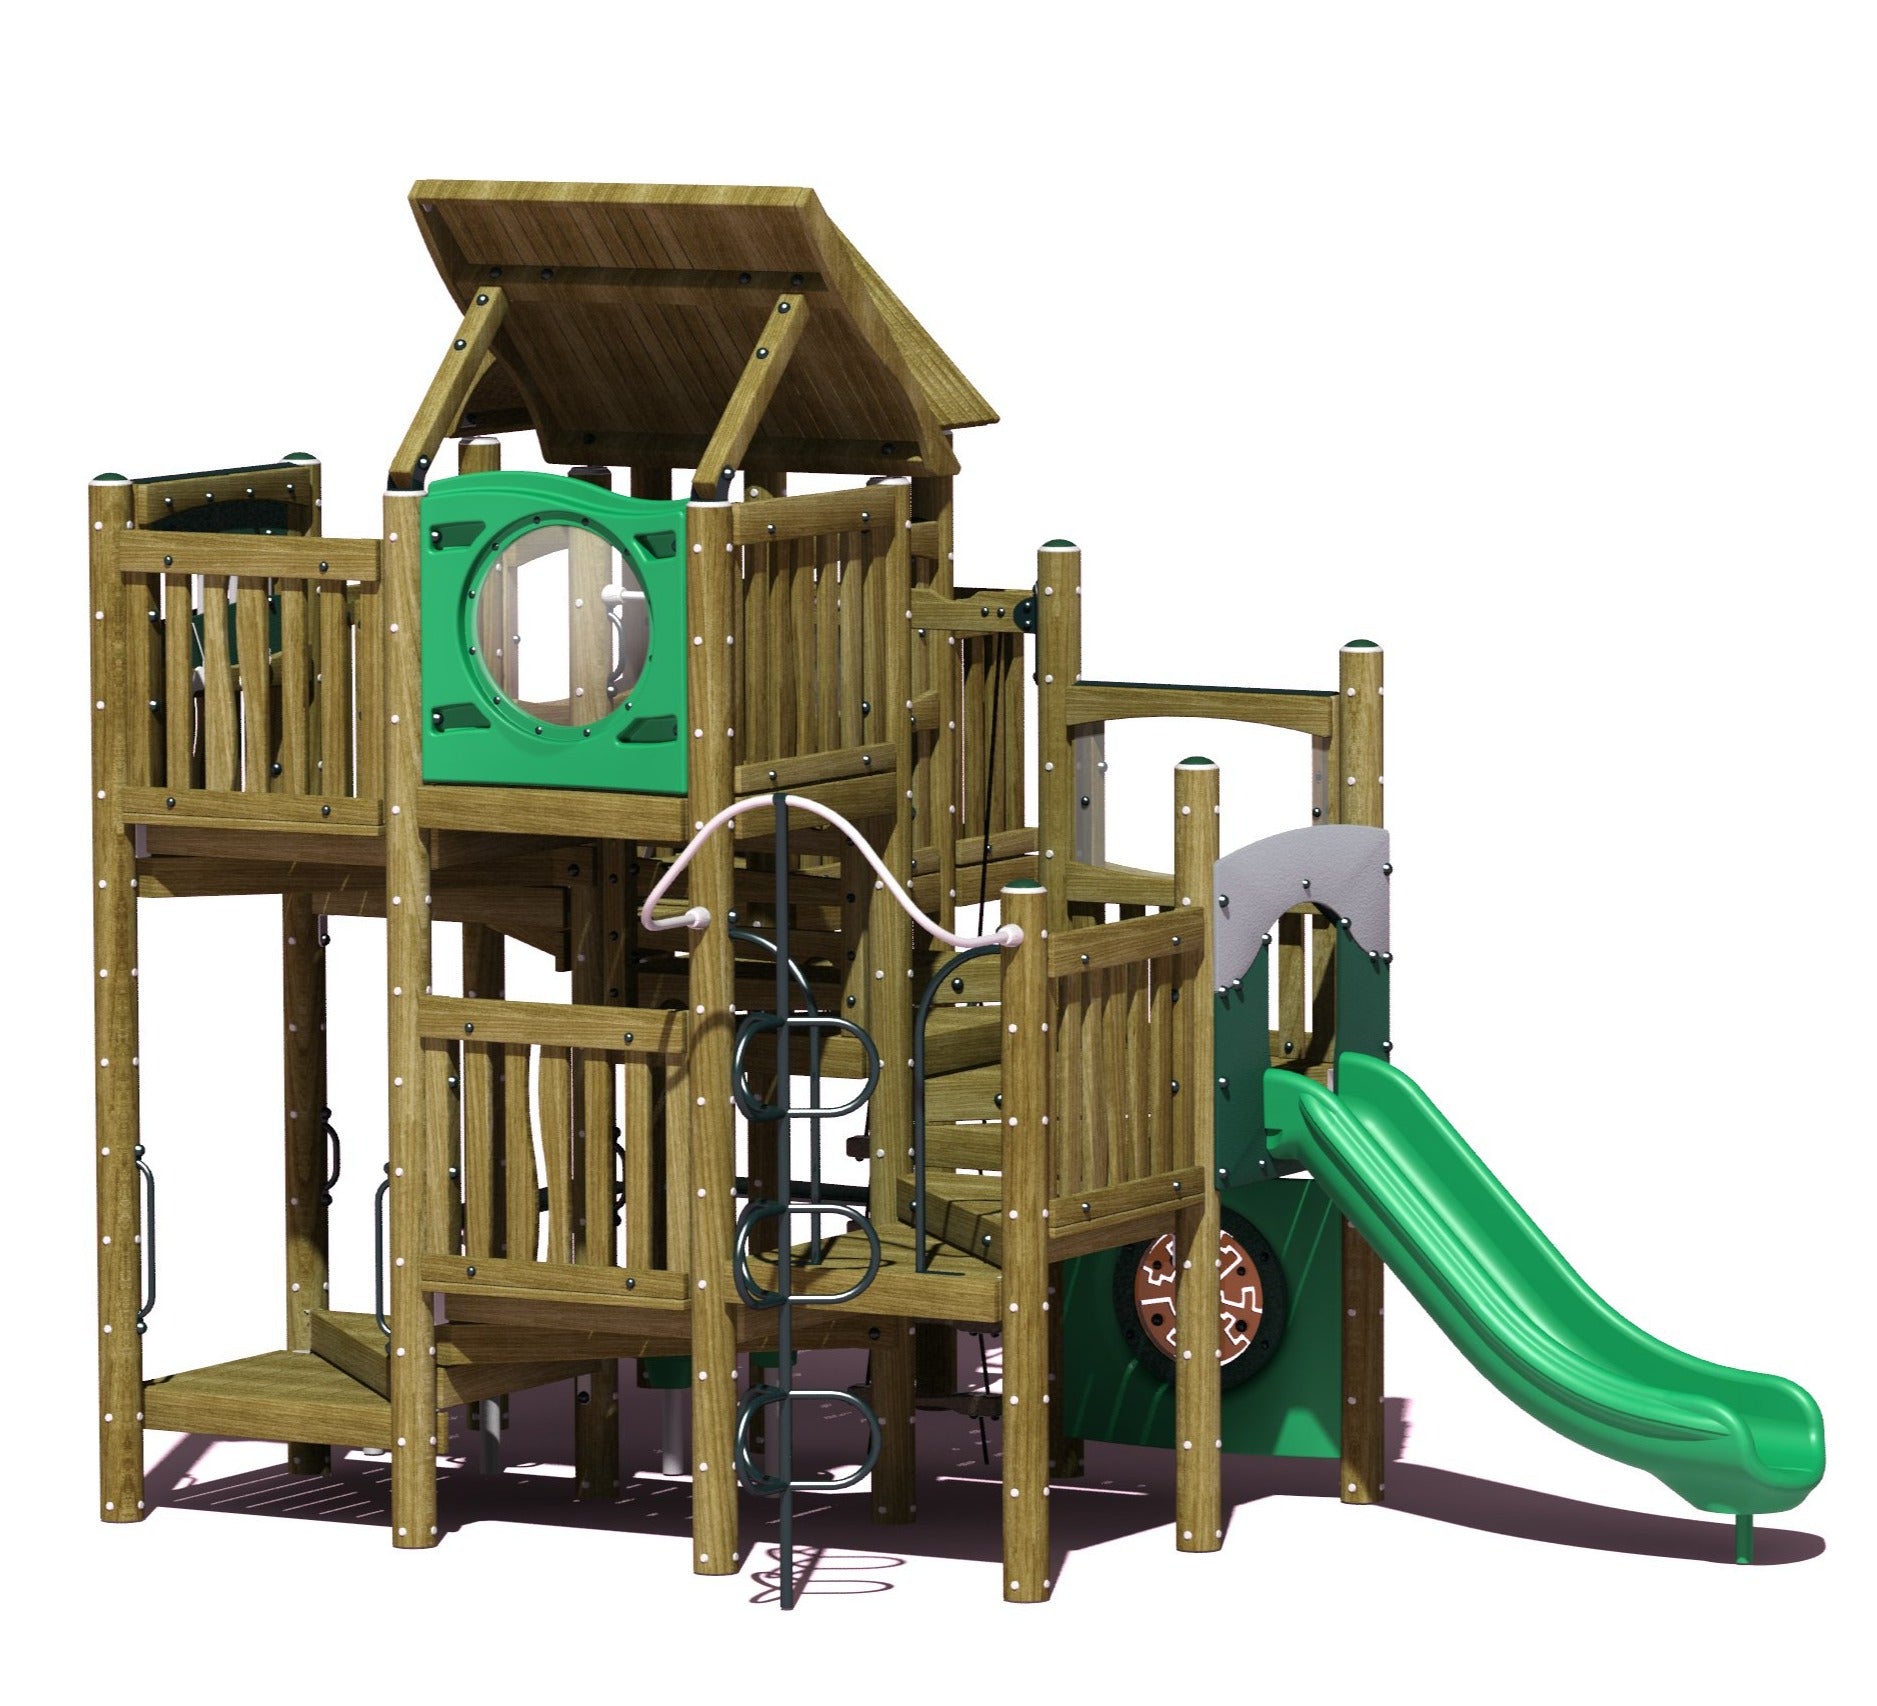 Cedar Play System | WillyGoat Playground & Park Equipment